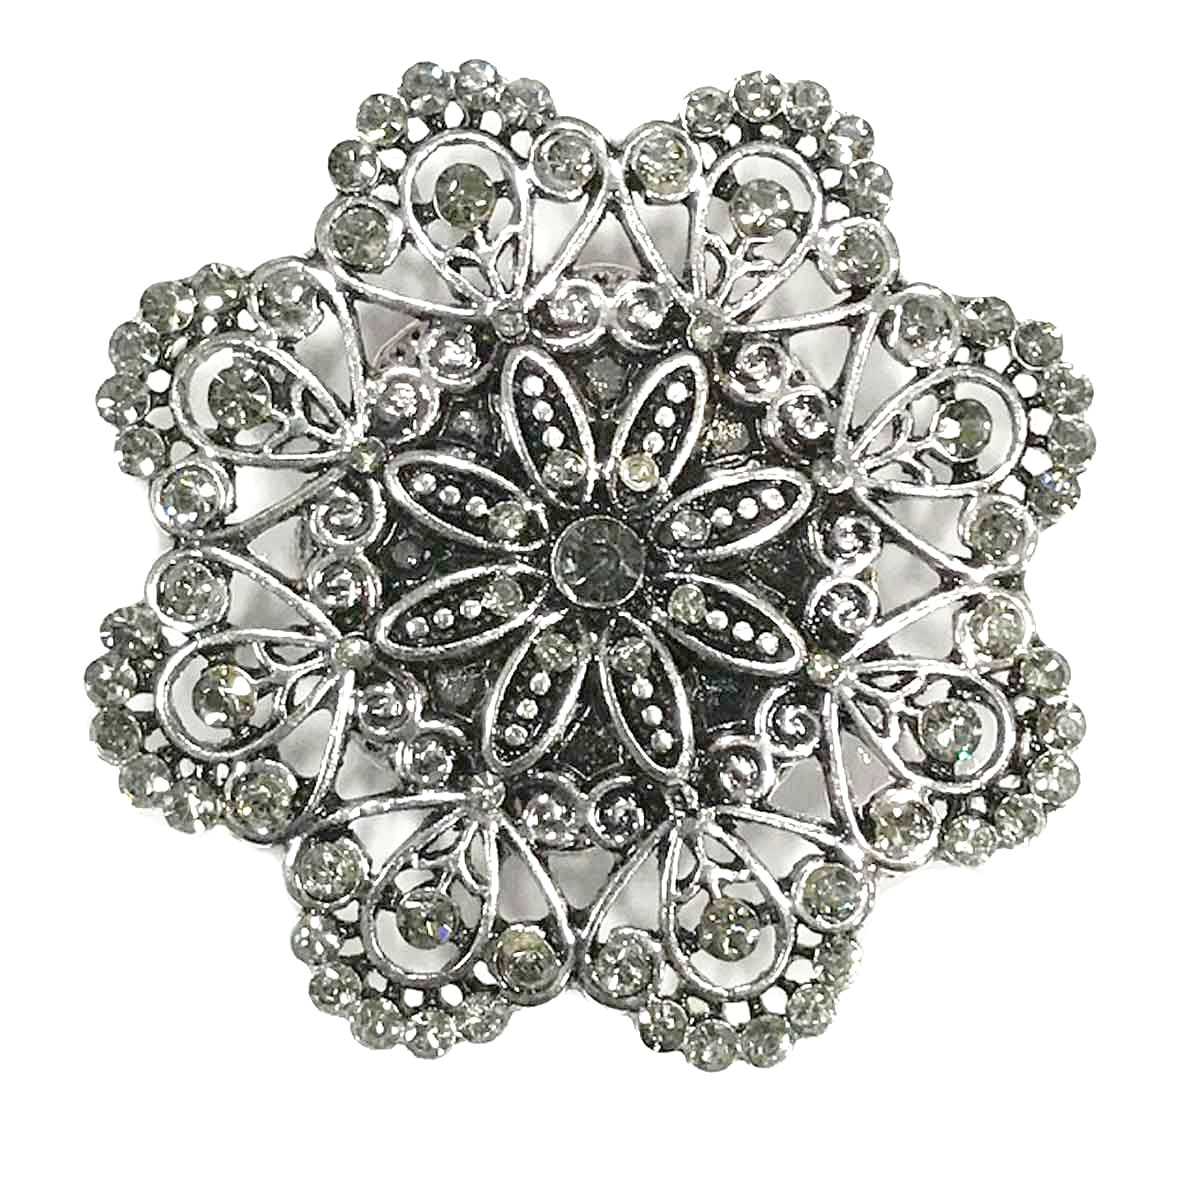 2997 - Artful Design Magnetic Brooches 533 Silver Mandala 8 Sided - 1.75